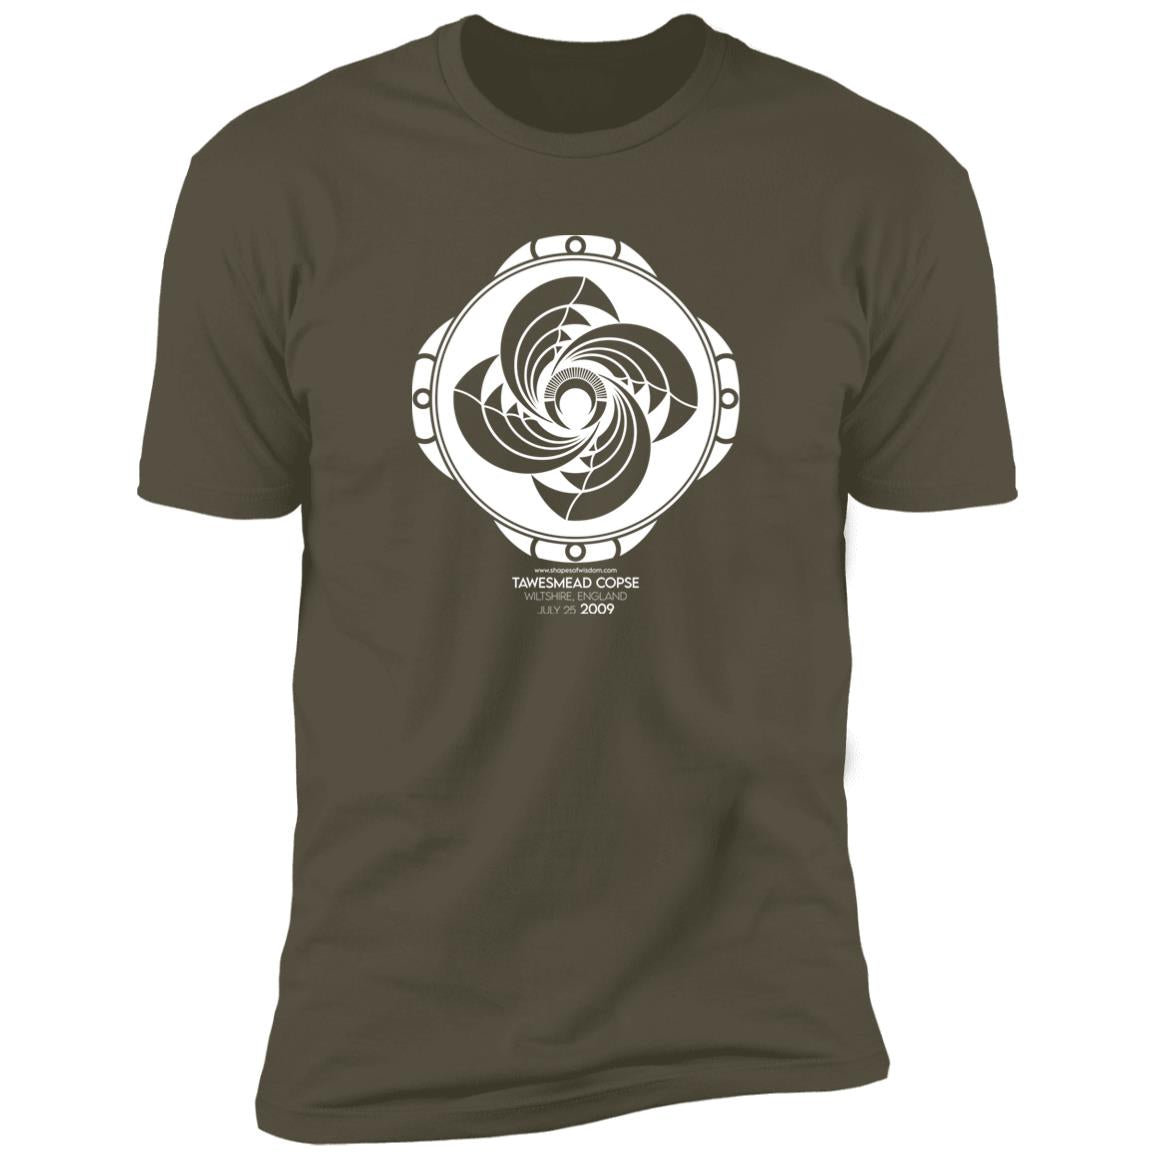 Crop Circle Premium T-Shirt - Tawesmead Copse 2